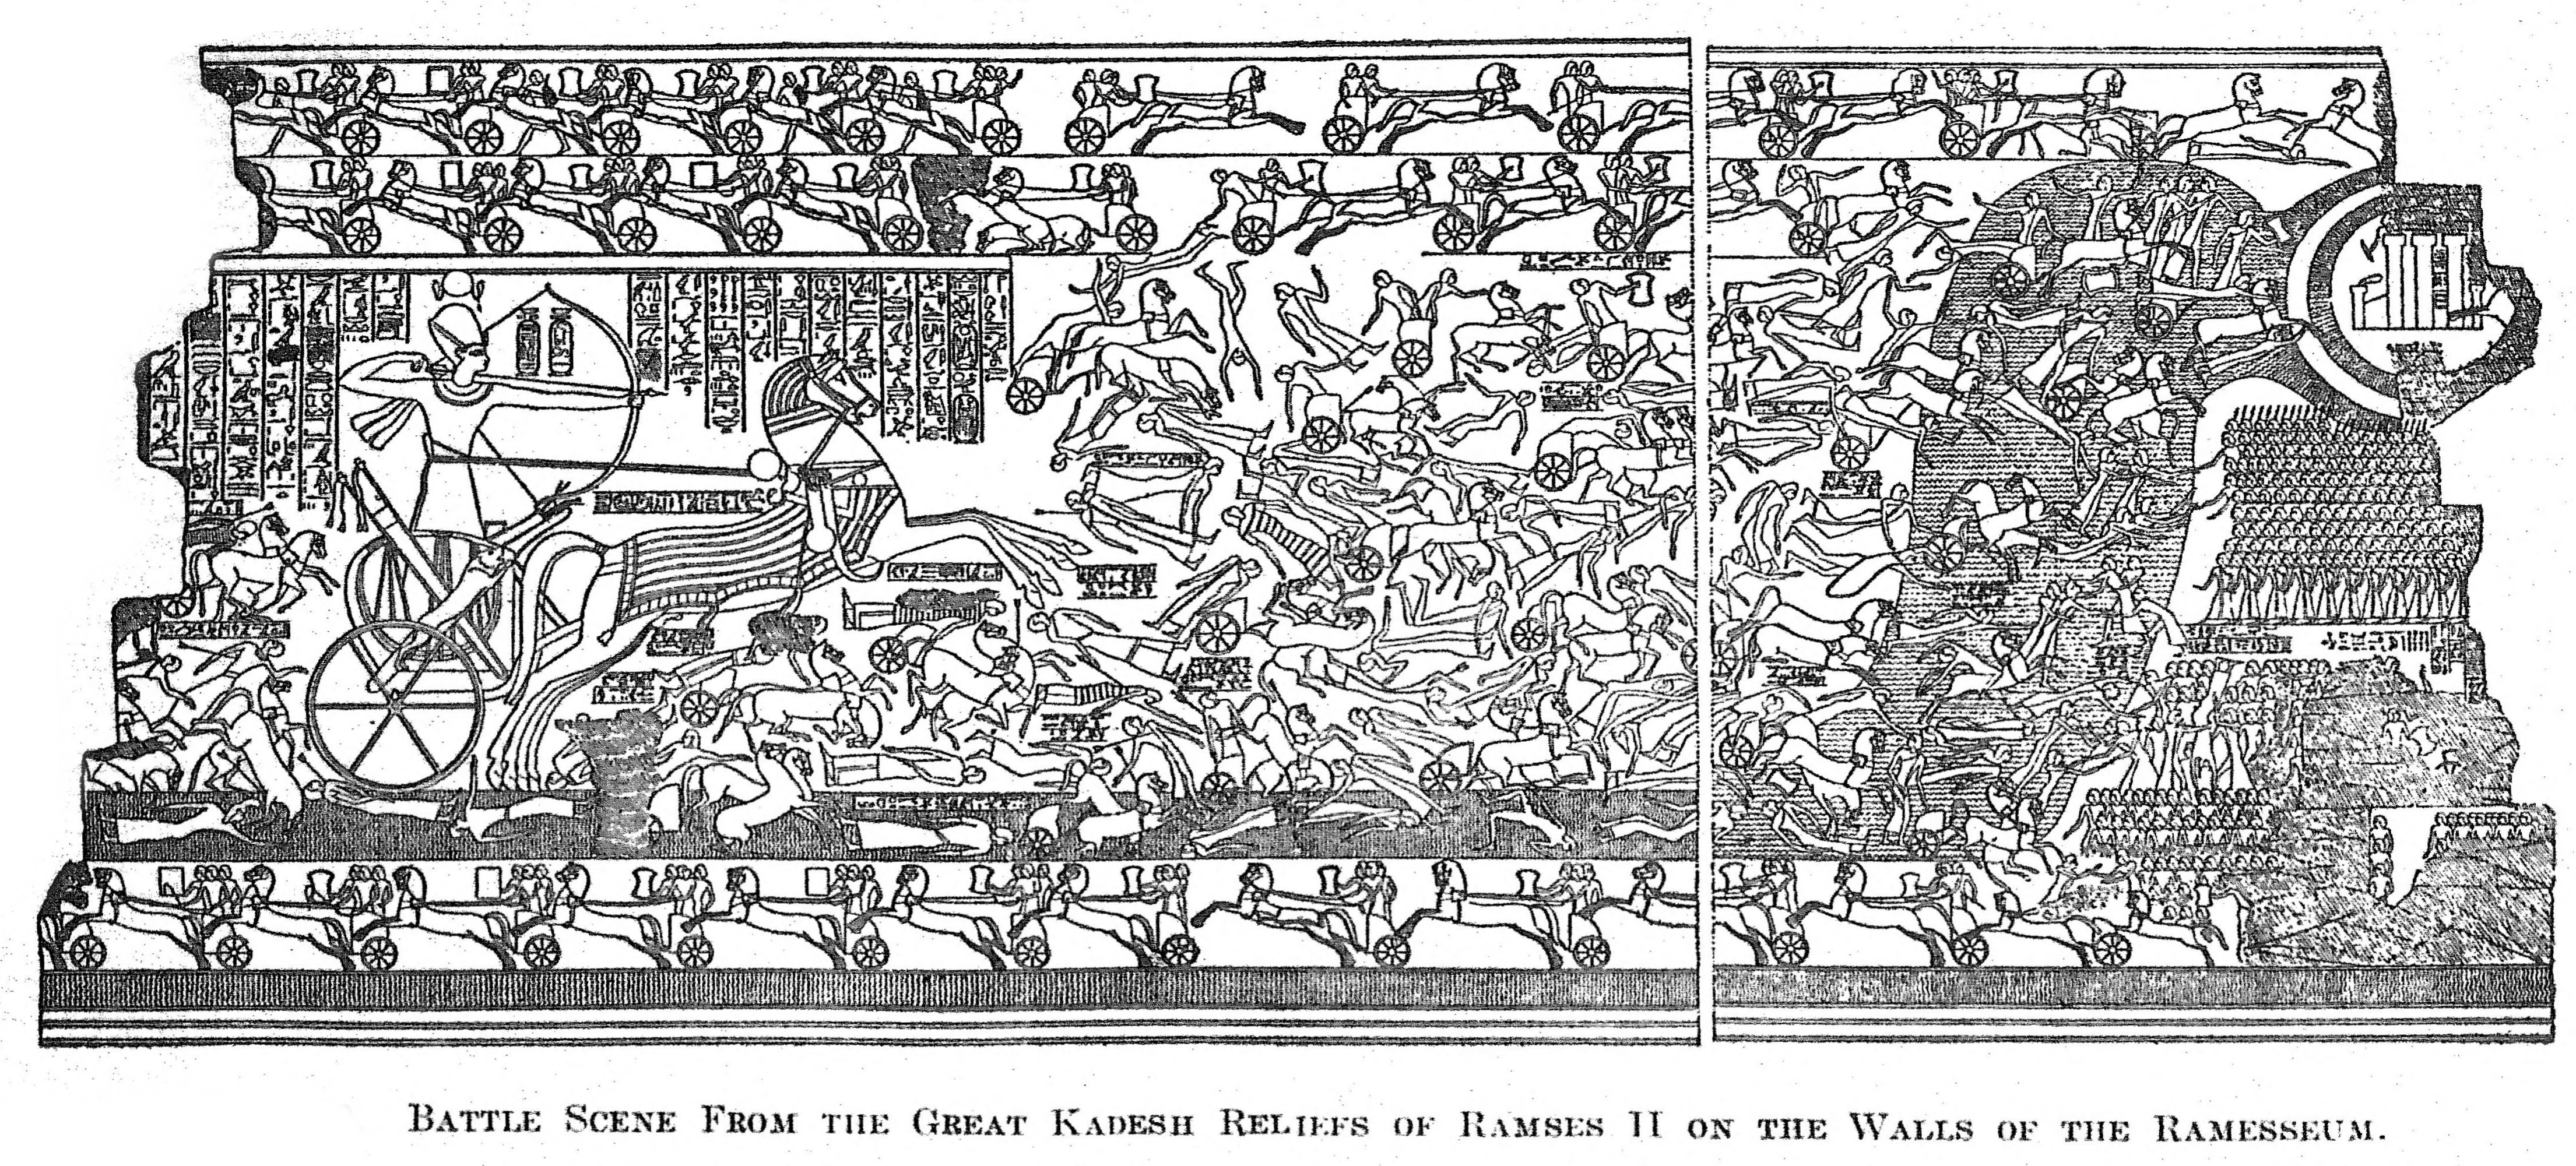 Battle scene from the Great Kadesh reliefs of Ramses II